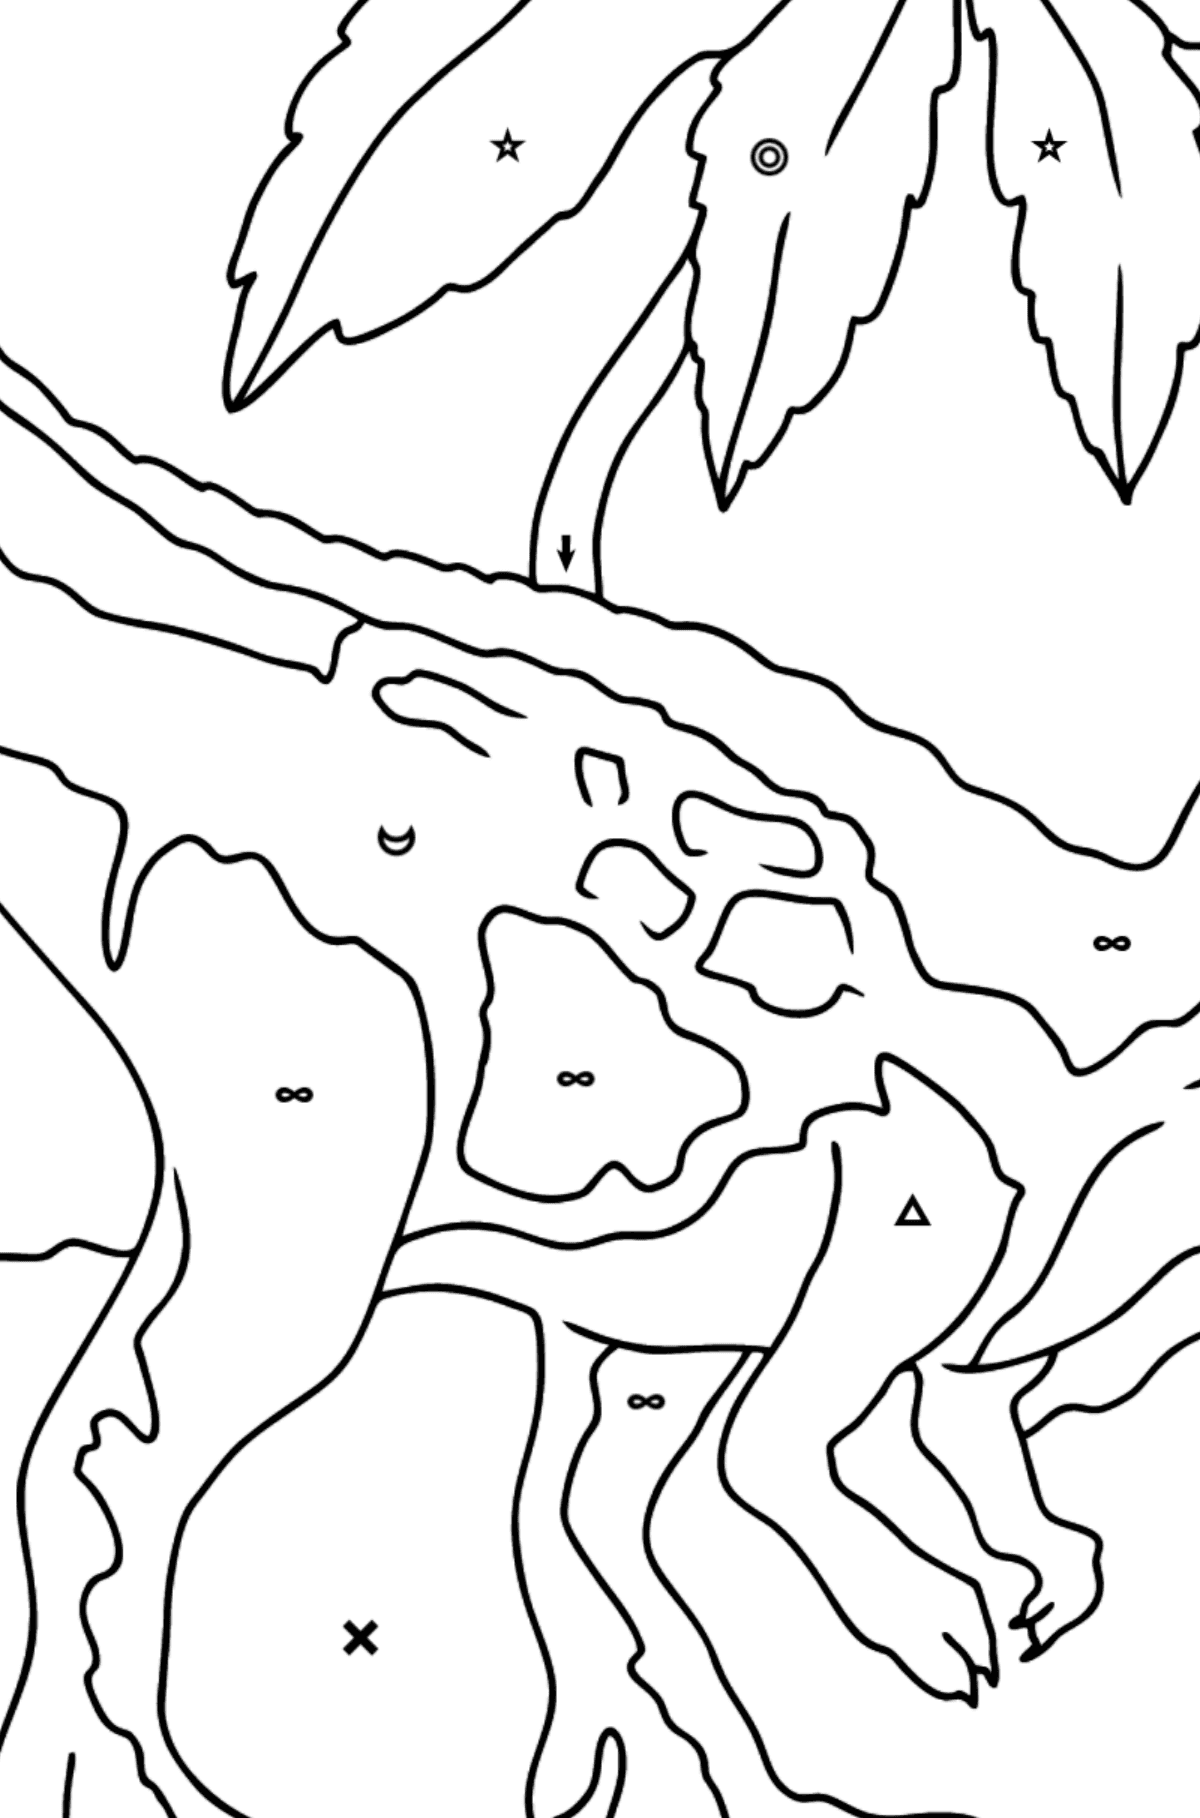 Tiranosaurio depredador Dibujo para colorear - Colorear por Símbolos para Niños